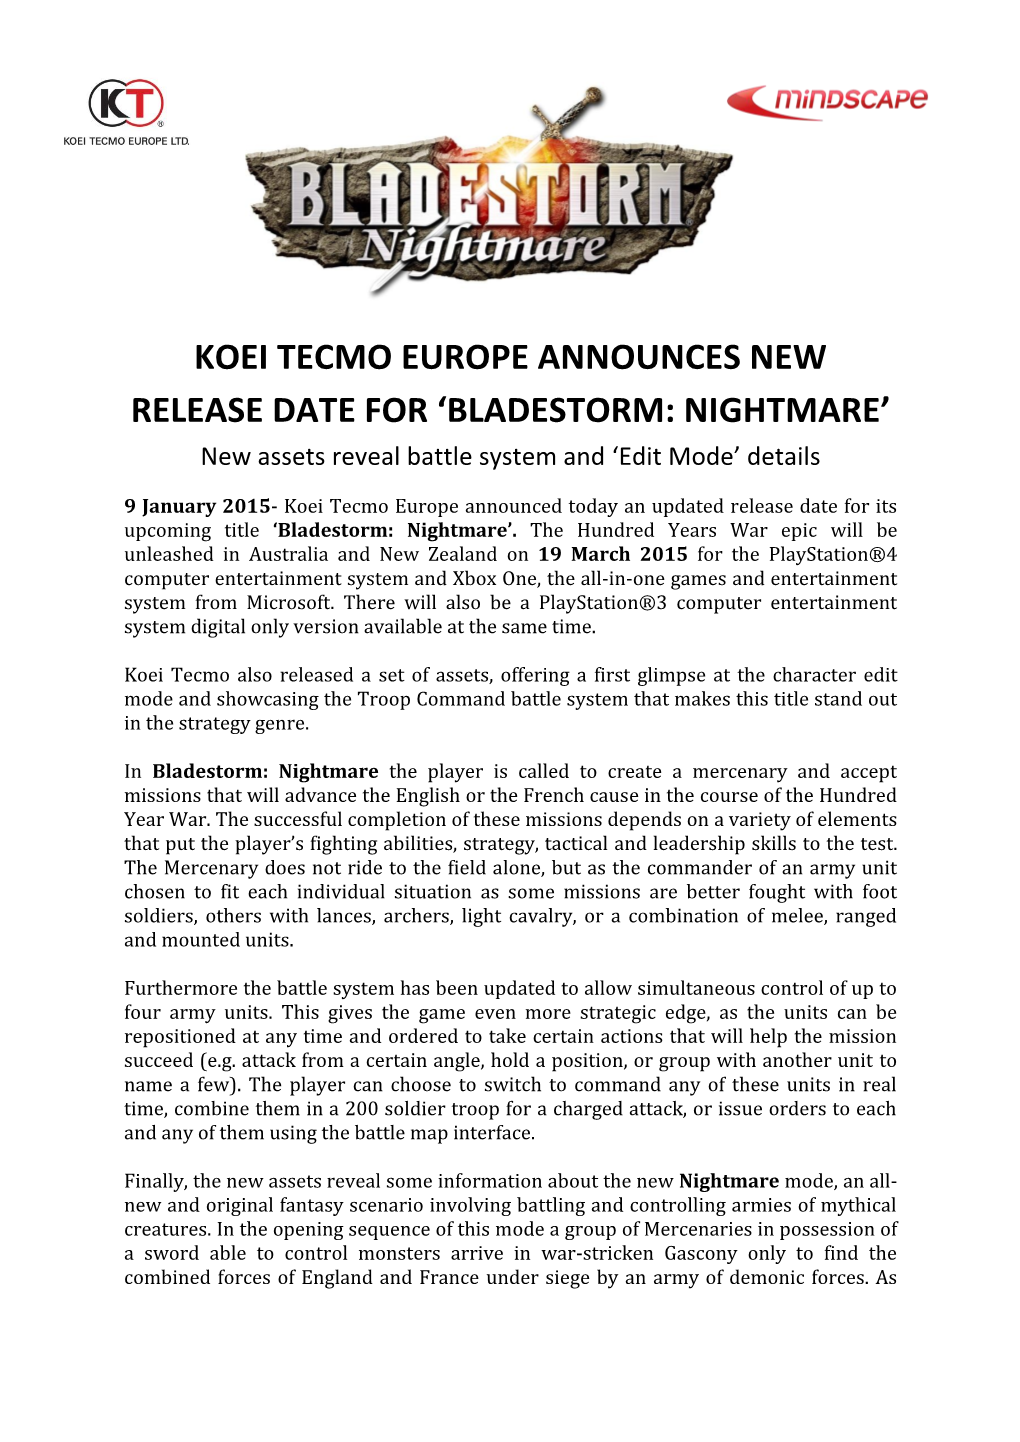 BLADESTORM: NIGHTMARE’ New Assets Reveal Battle System and ‘Edit Mode’ Details